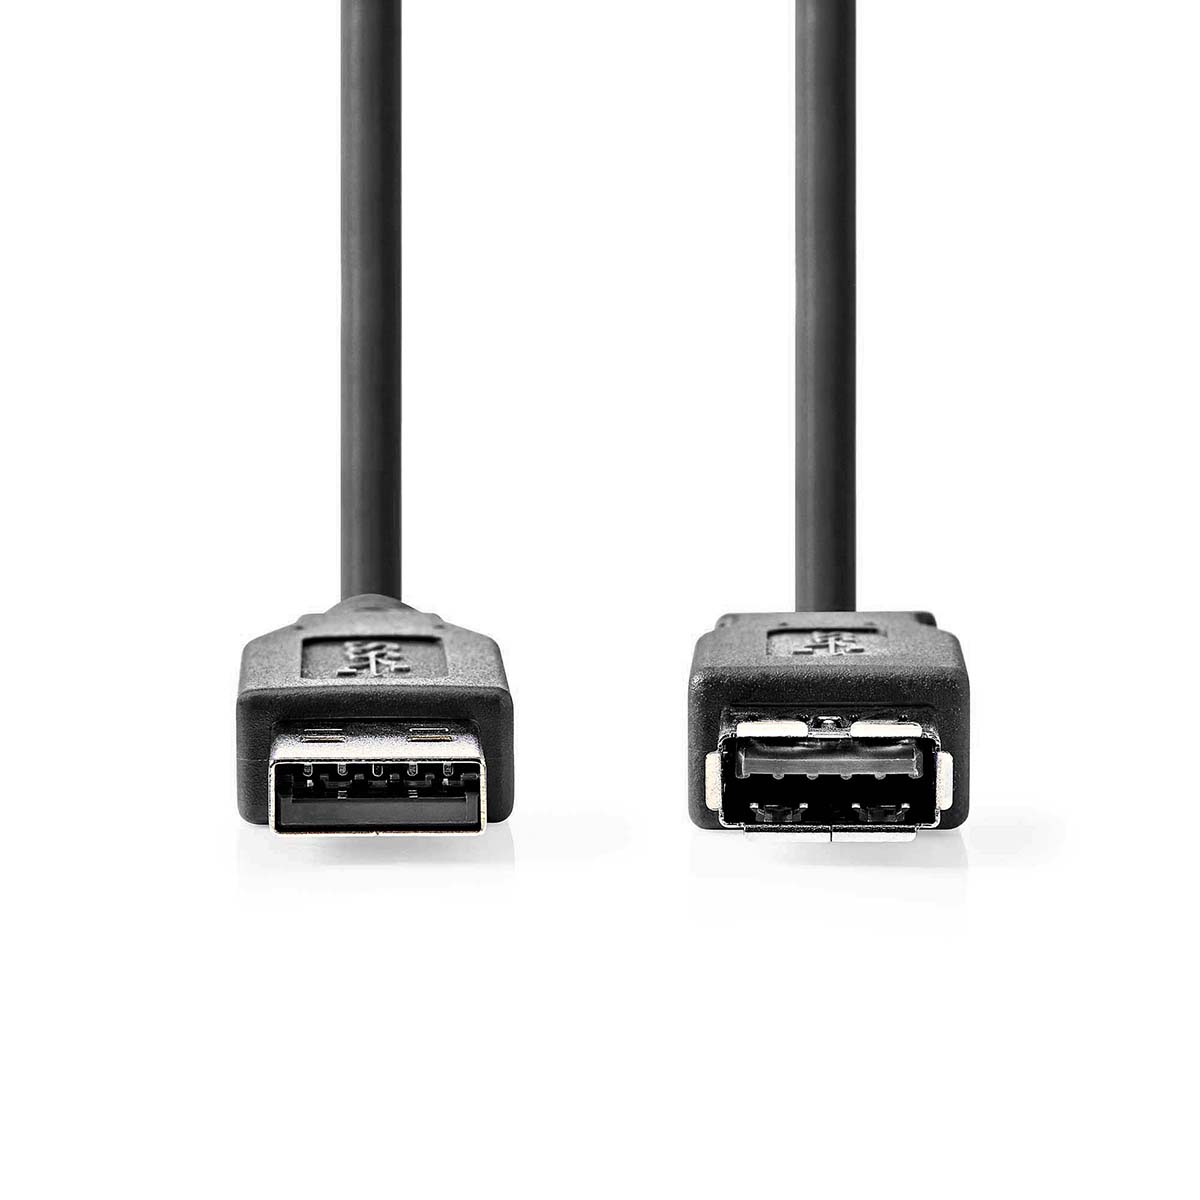 USB-Kabel NEDIS CCGL61010BK30,